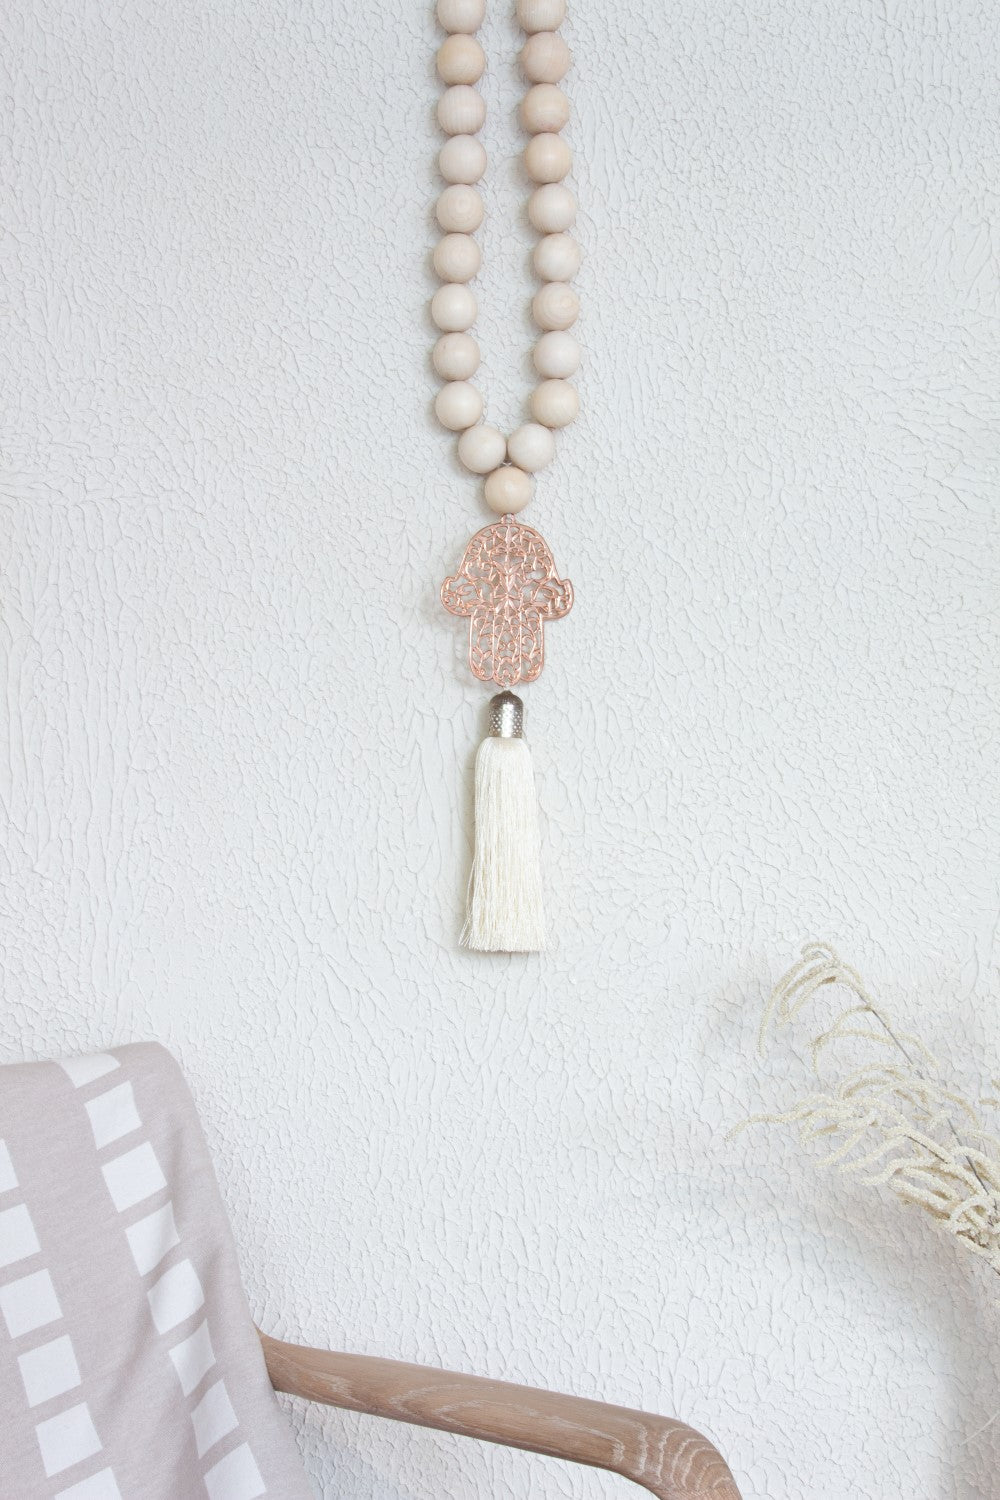 Rose gold Hamsa wood Beads Wall Décor with cream Silk Tassel - Stylish Luck Home Decor | Hamsa \ Hand Of Fatima | Good Luck Gifts